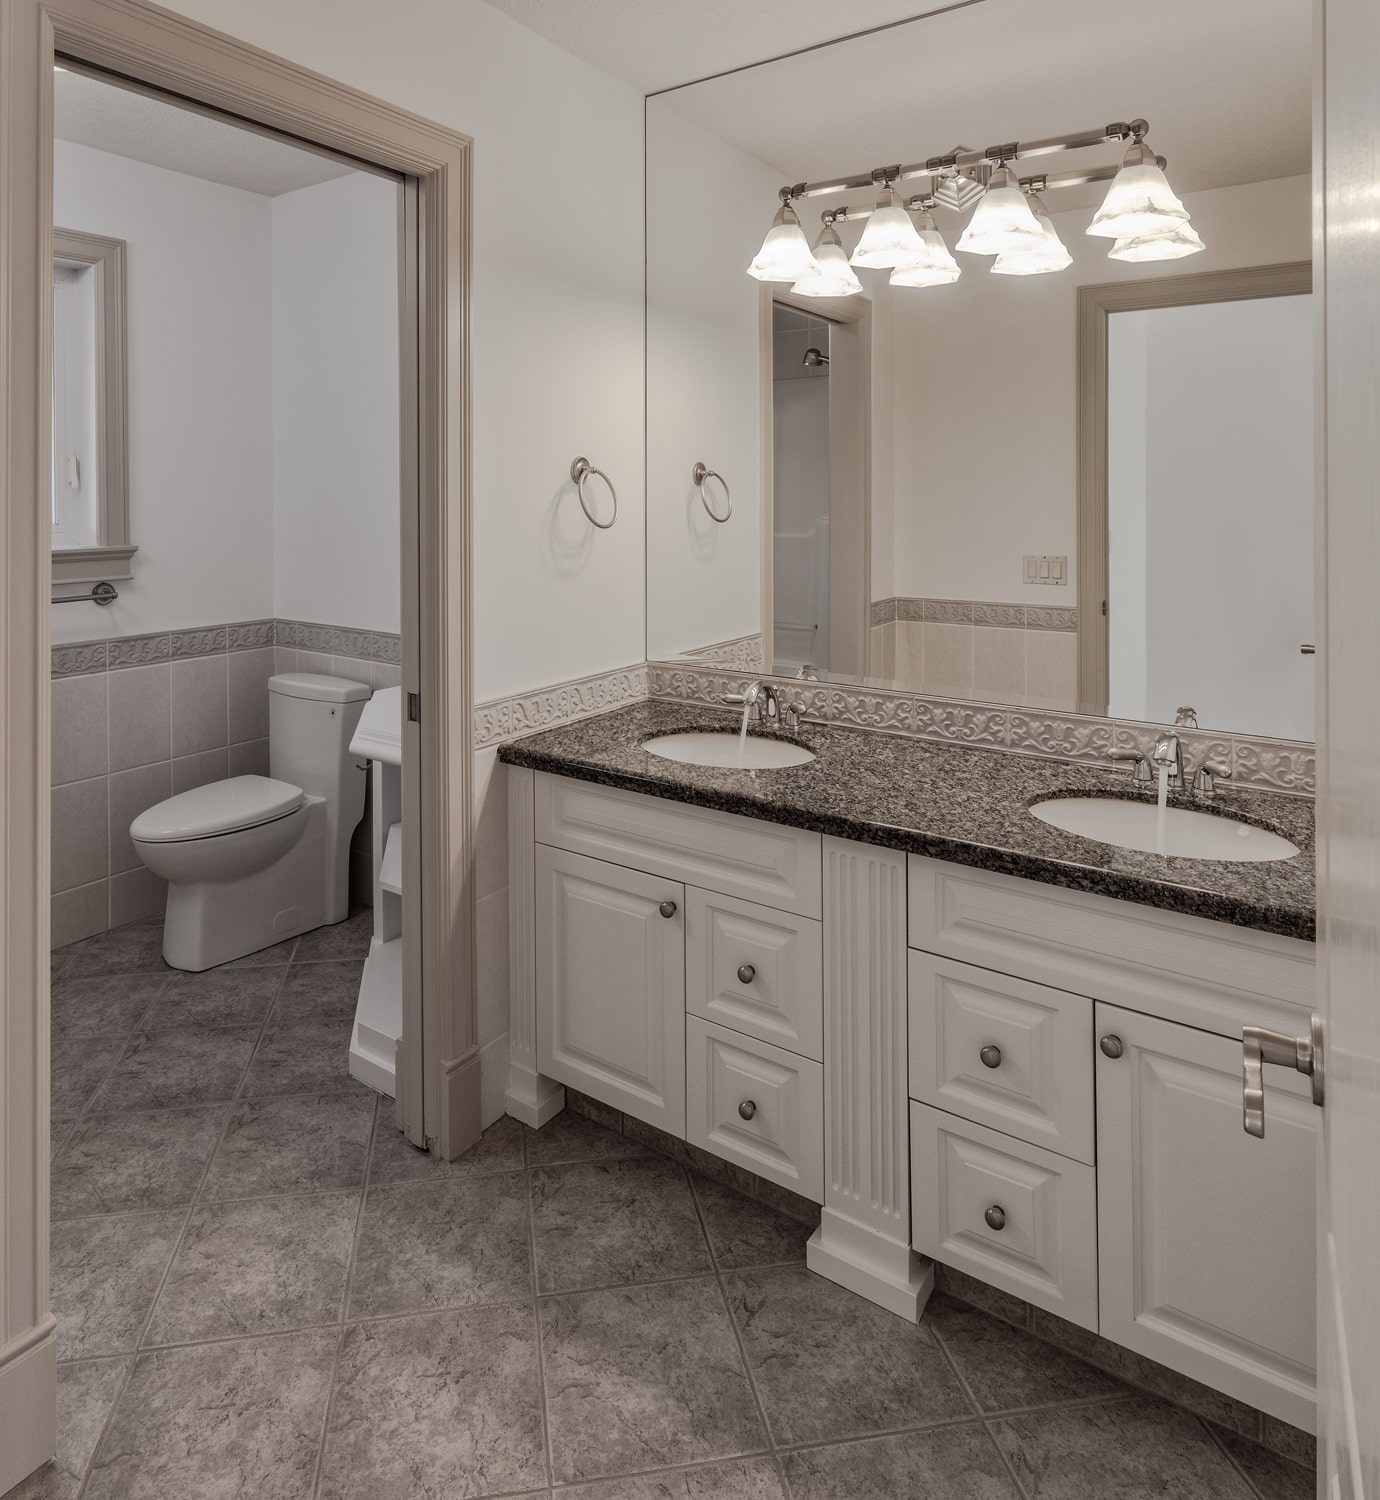 A modern bathroom with a minimalist tap, sleek showerhead, elegant light fittings, and smart storage solutions.